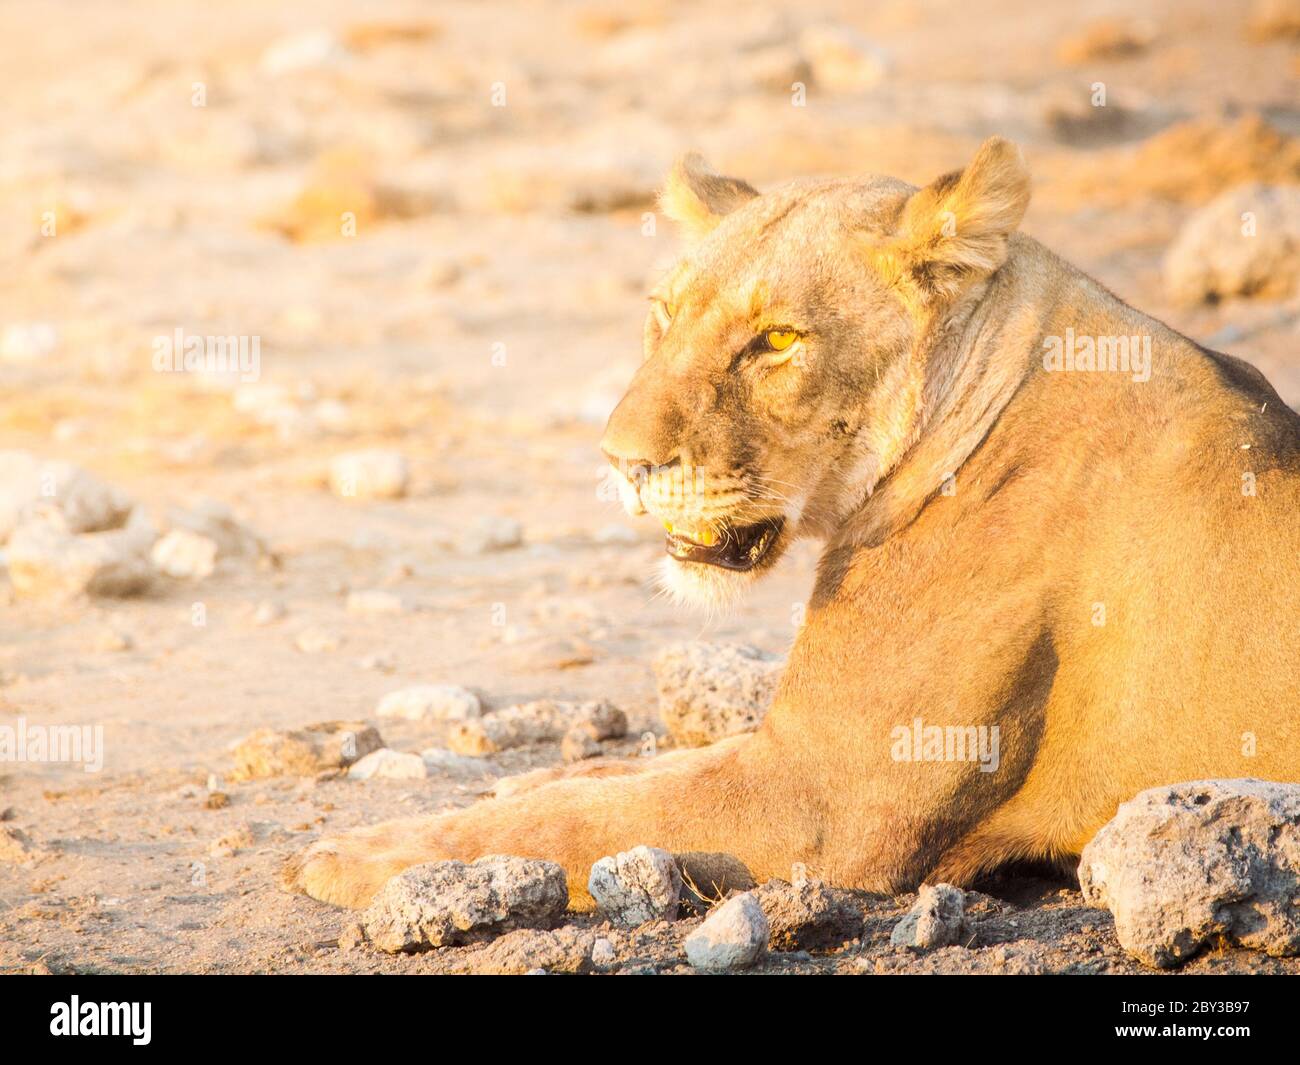 Leonessa riposa su un terreno polveroso, Etosha National Park, Namibia. Foto Stock